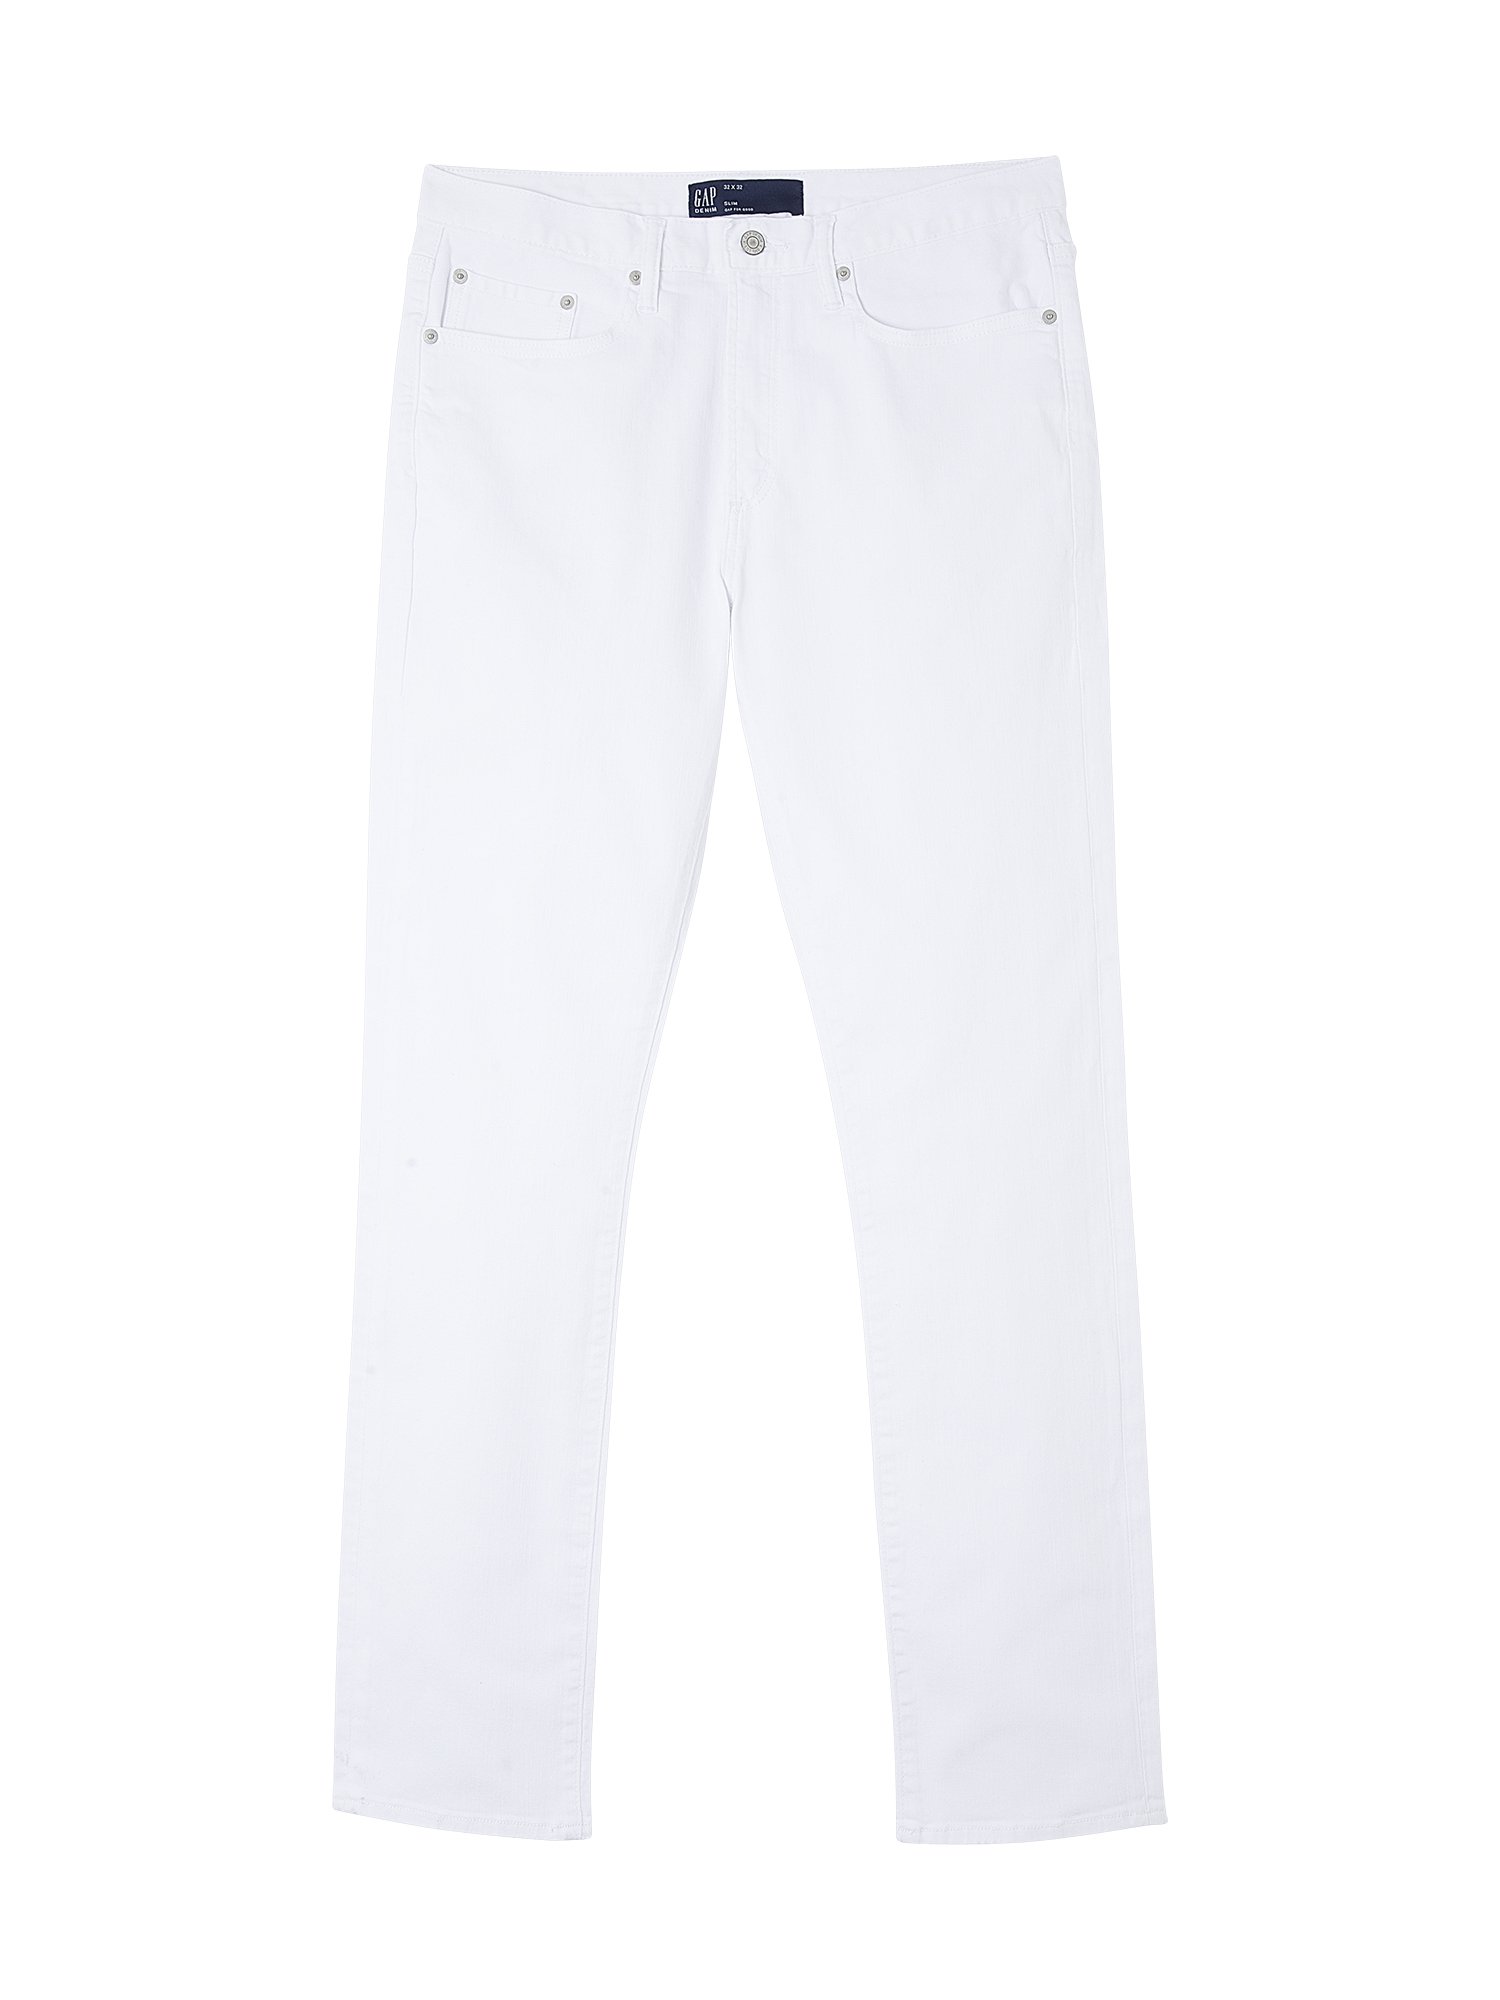 Beyaz Yıkamalı Slim Fit Jean Pantolon product image